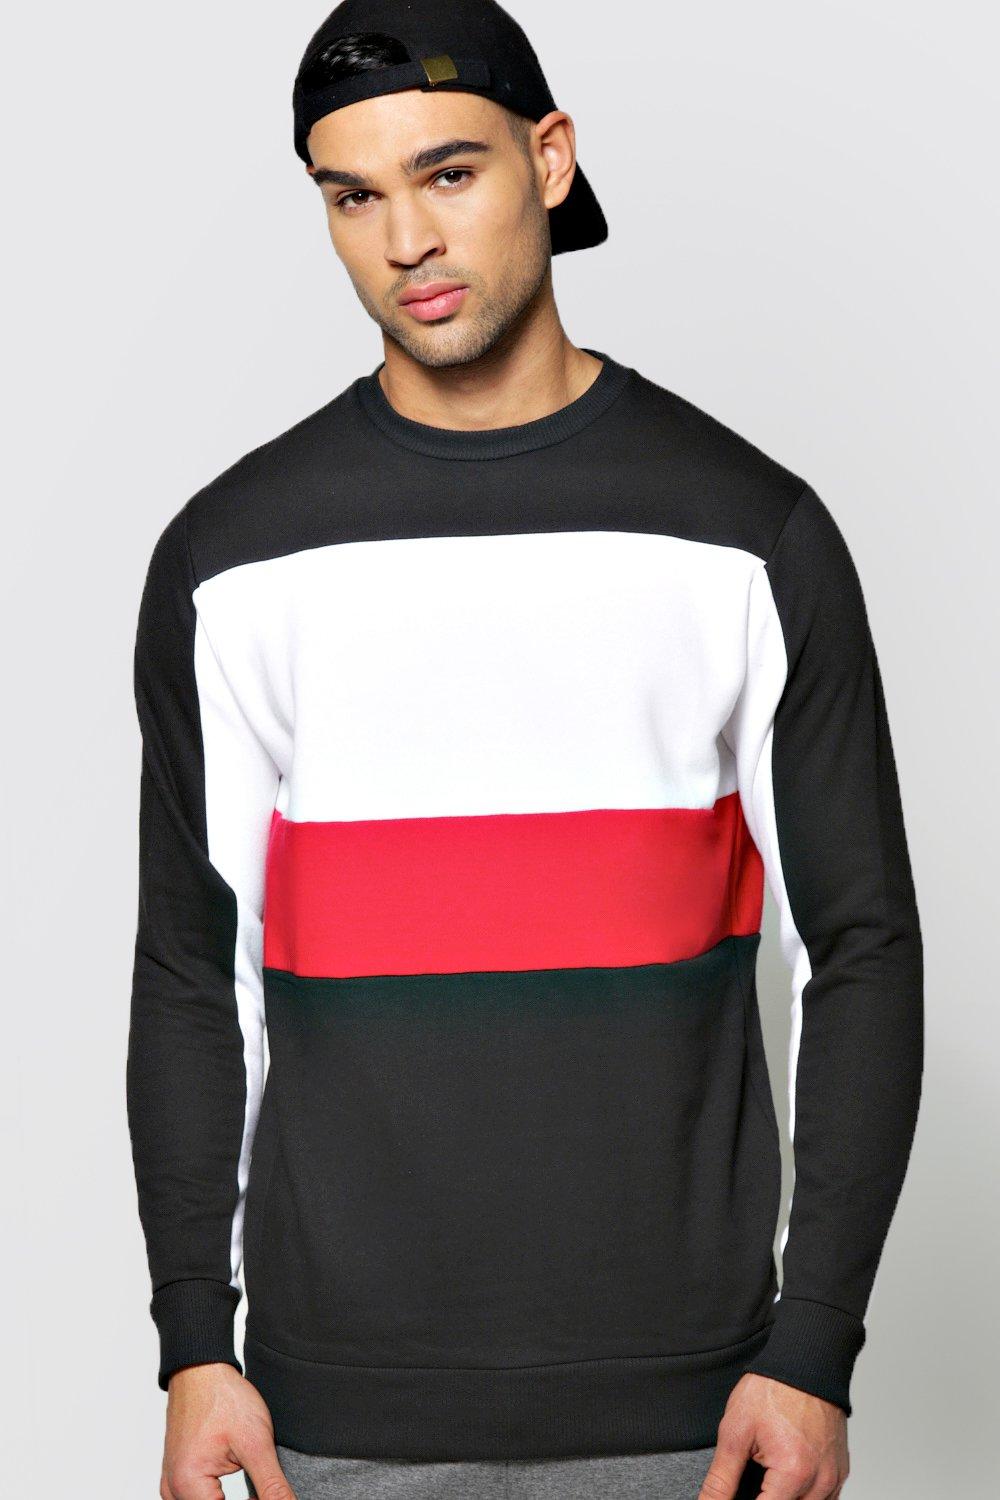 Boohoo Mens Colour Block Sweater | eBay